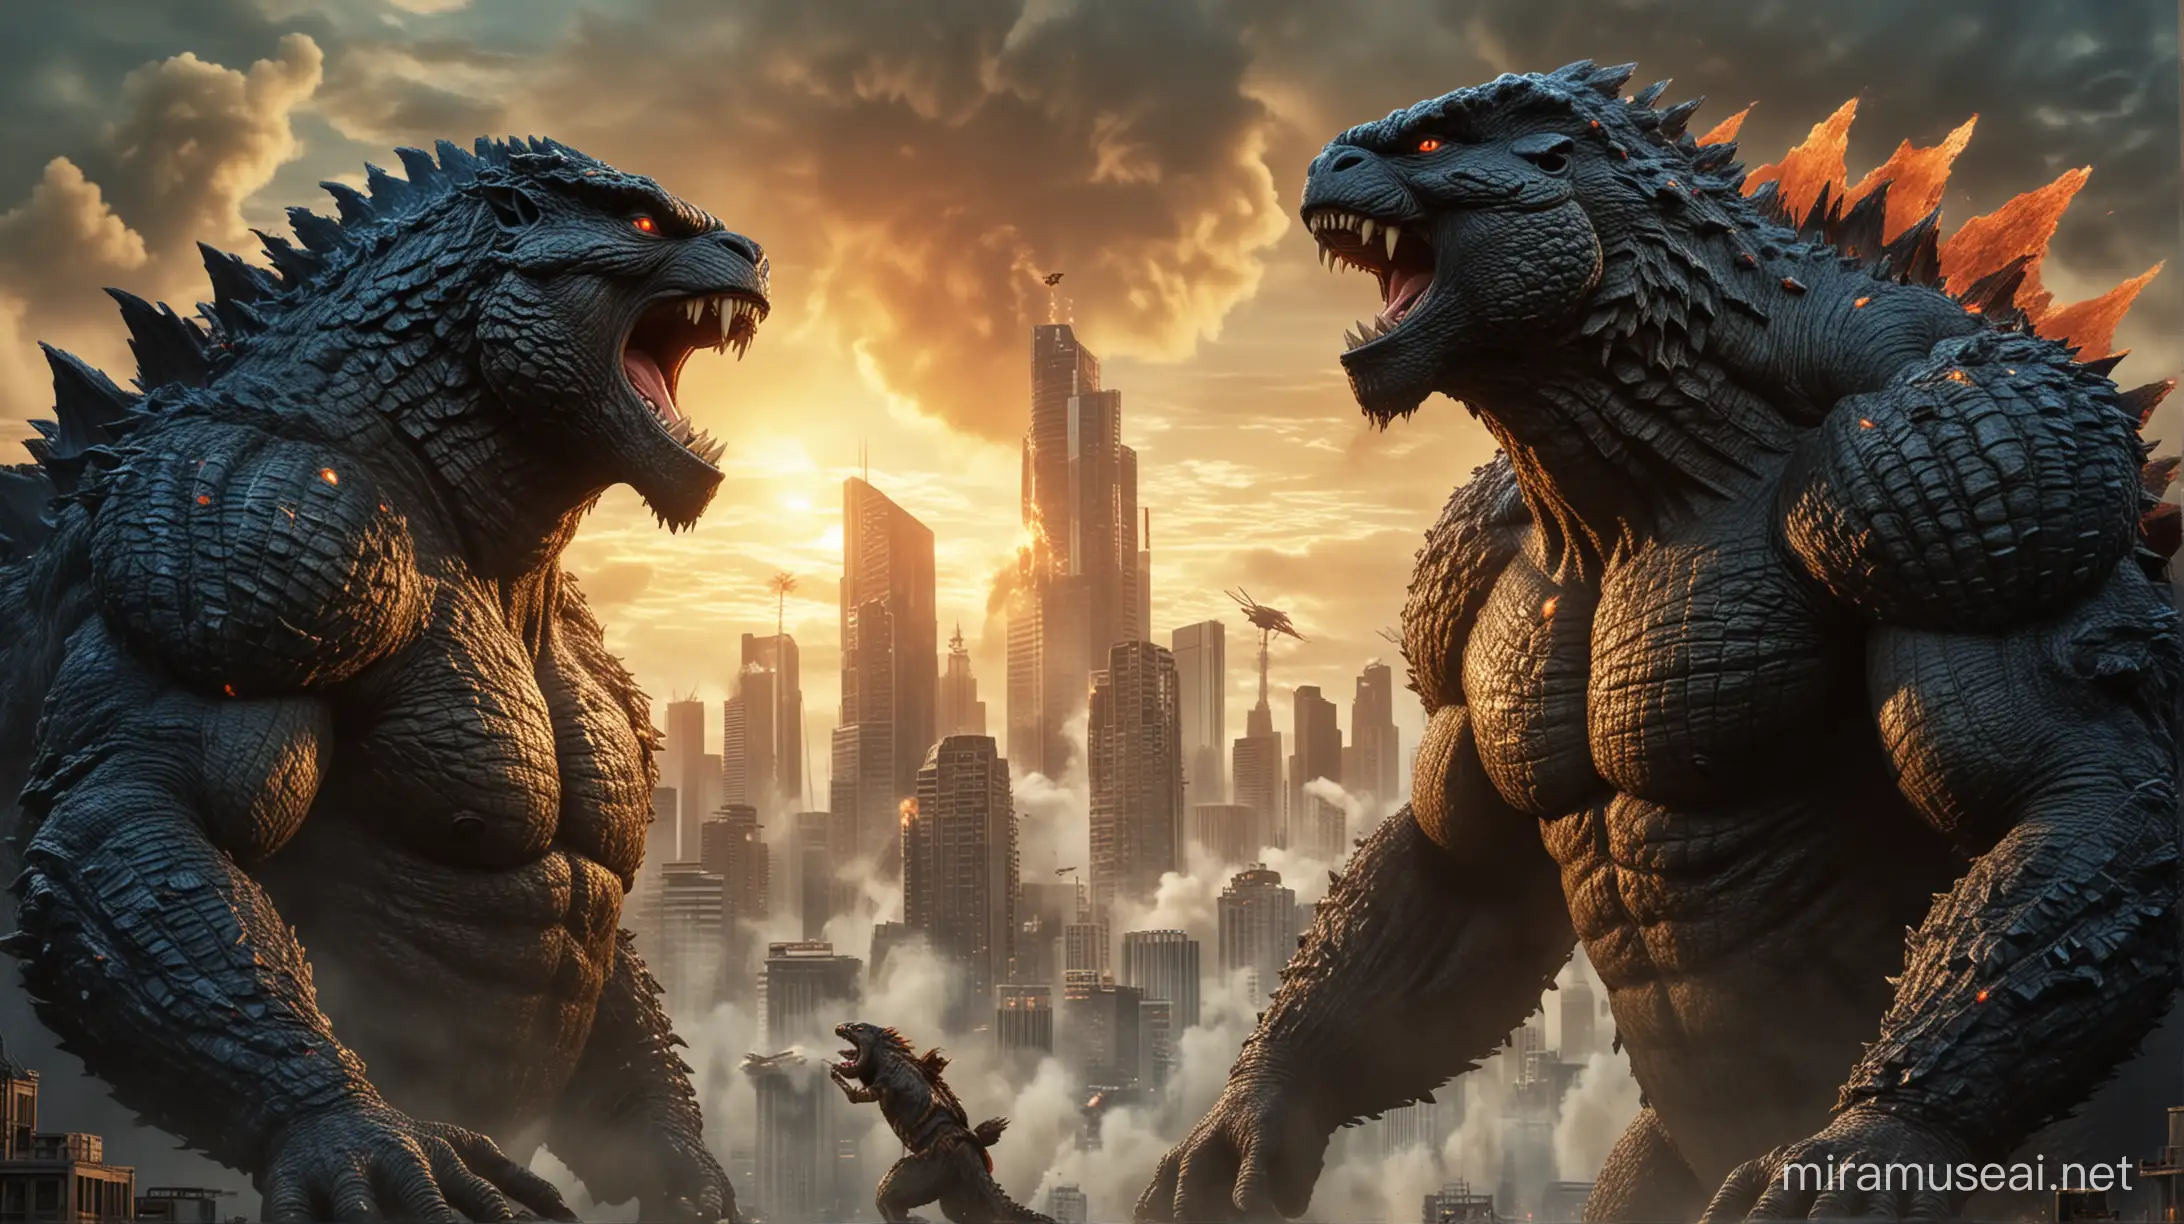 Epic Godzilla vs Kong Battle in Ruined Cityscape